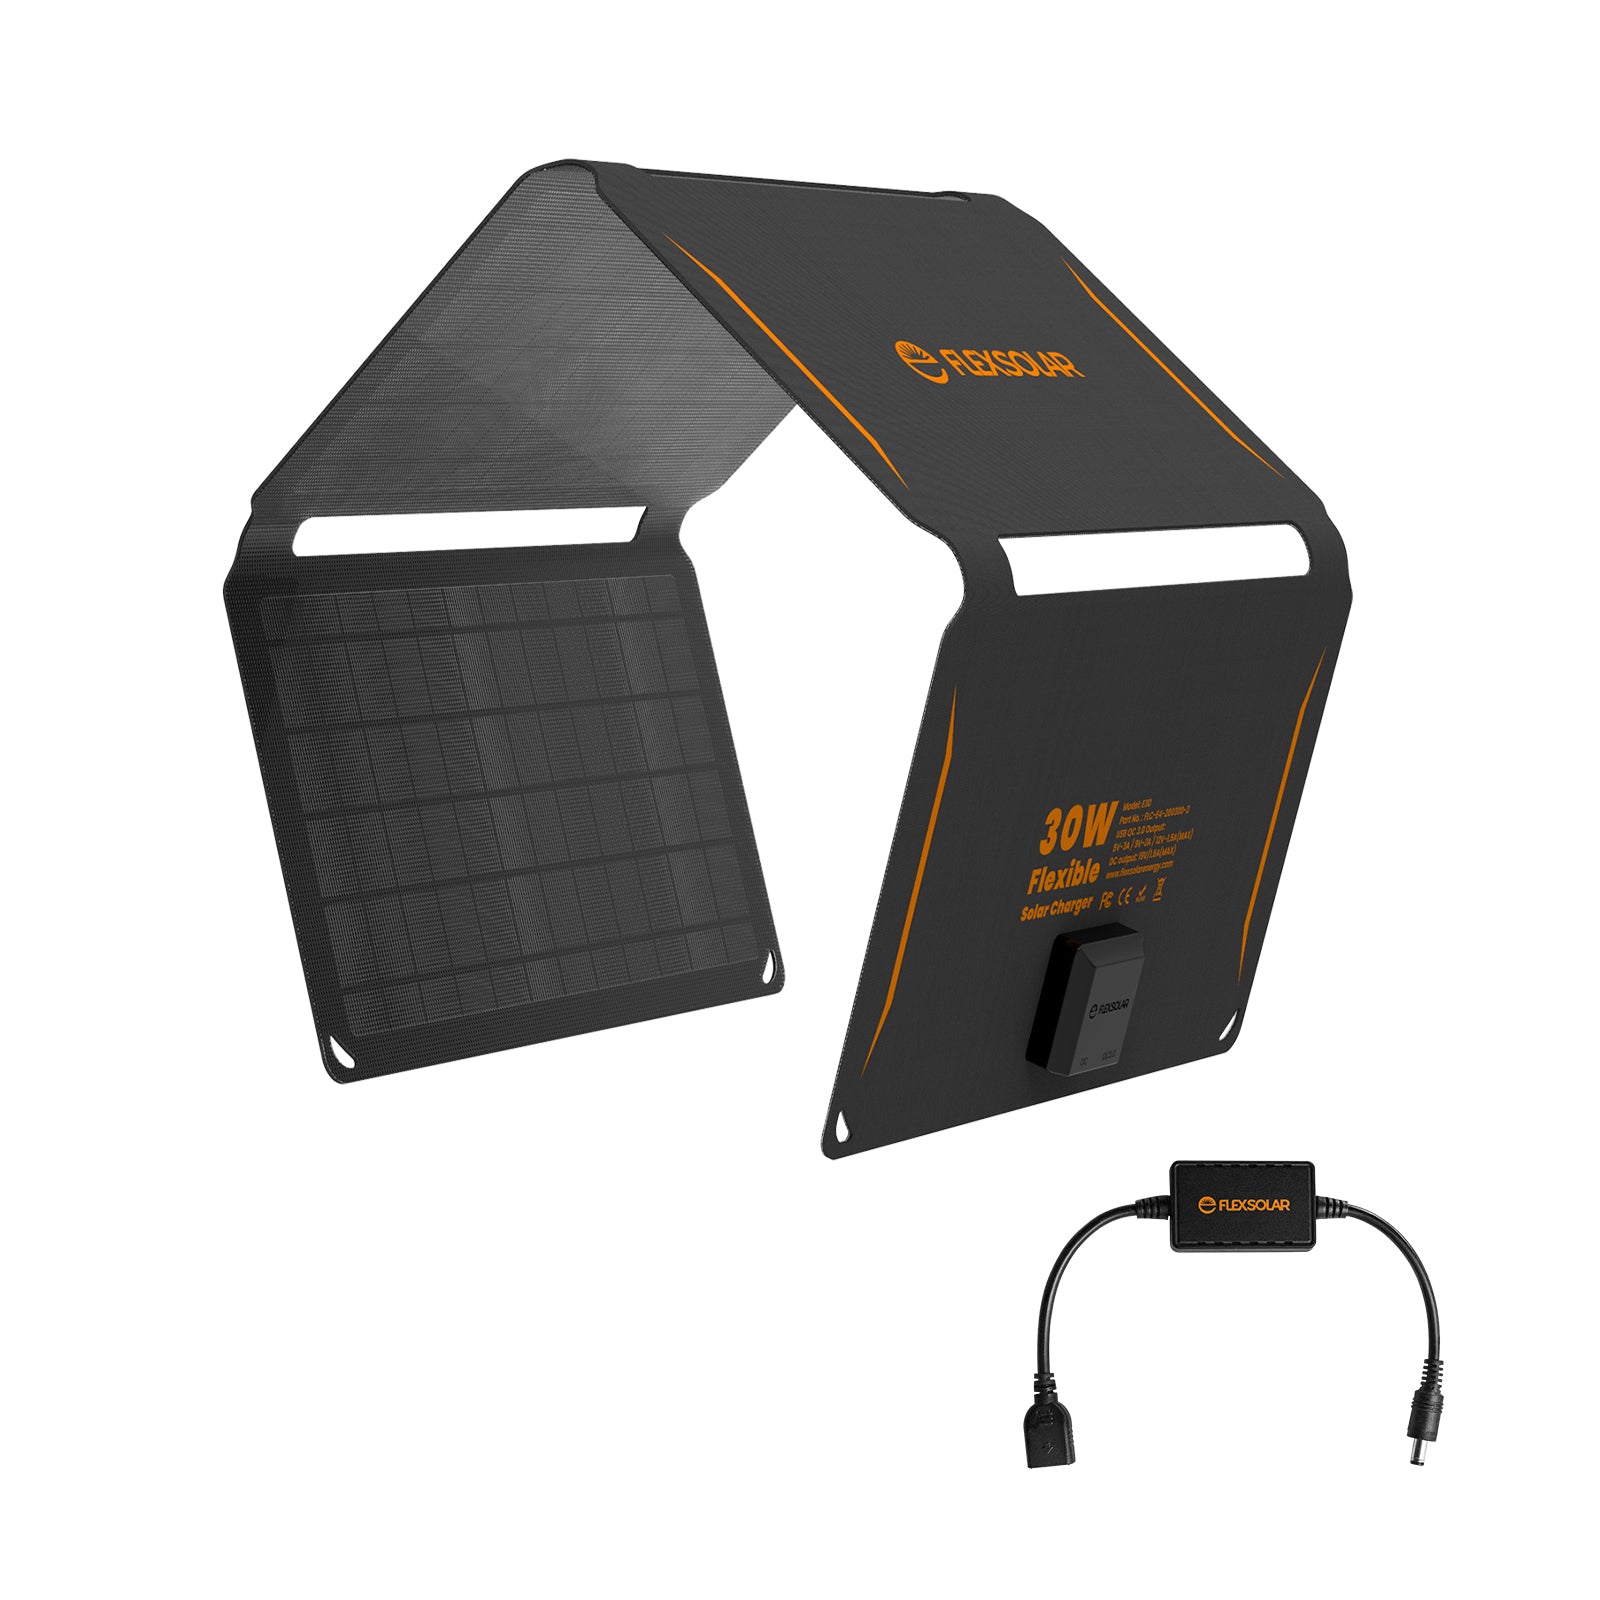 Cargador Solar Portátil De 15 W Panel Solar Steren - Muy Bacano